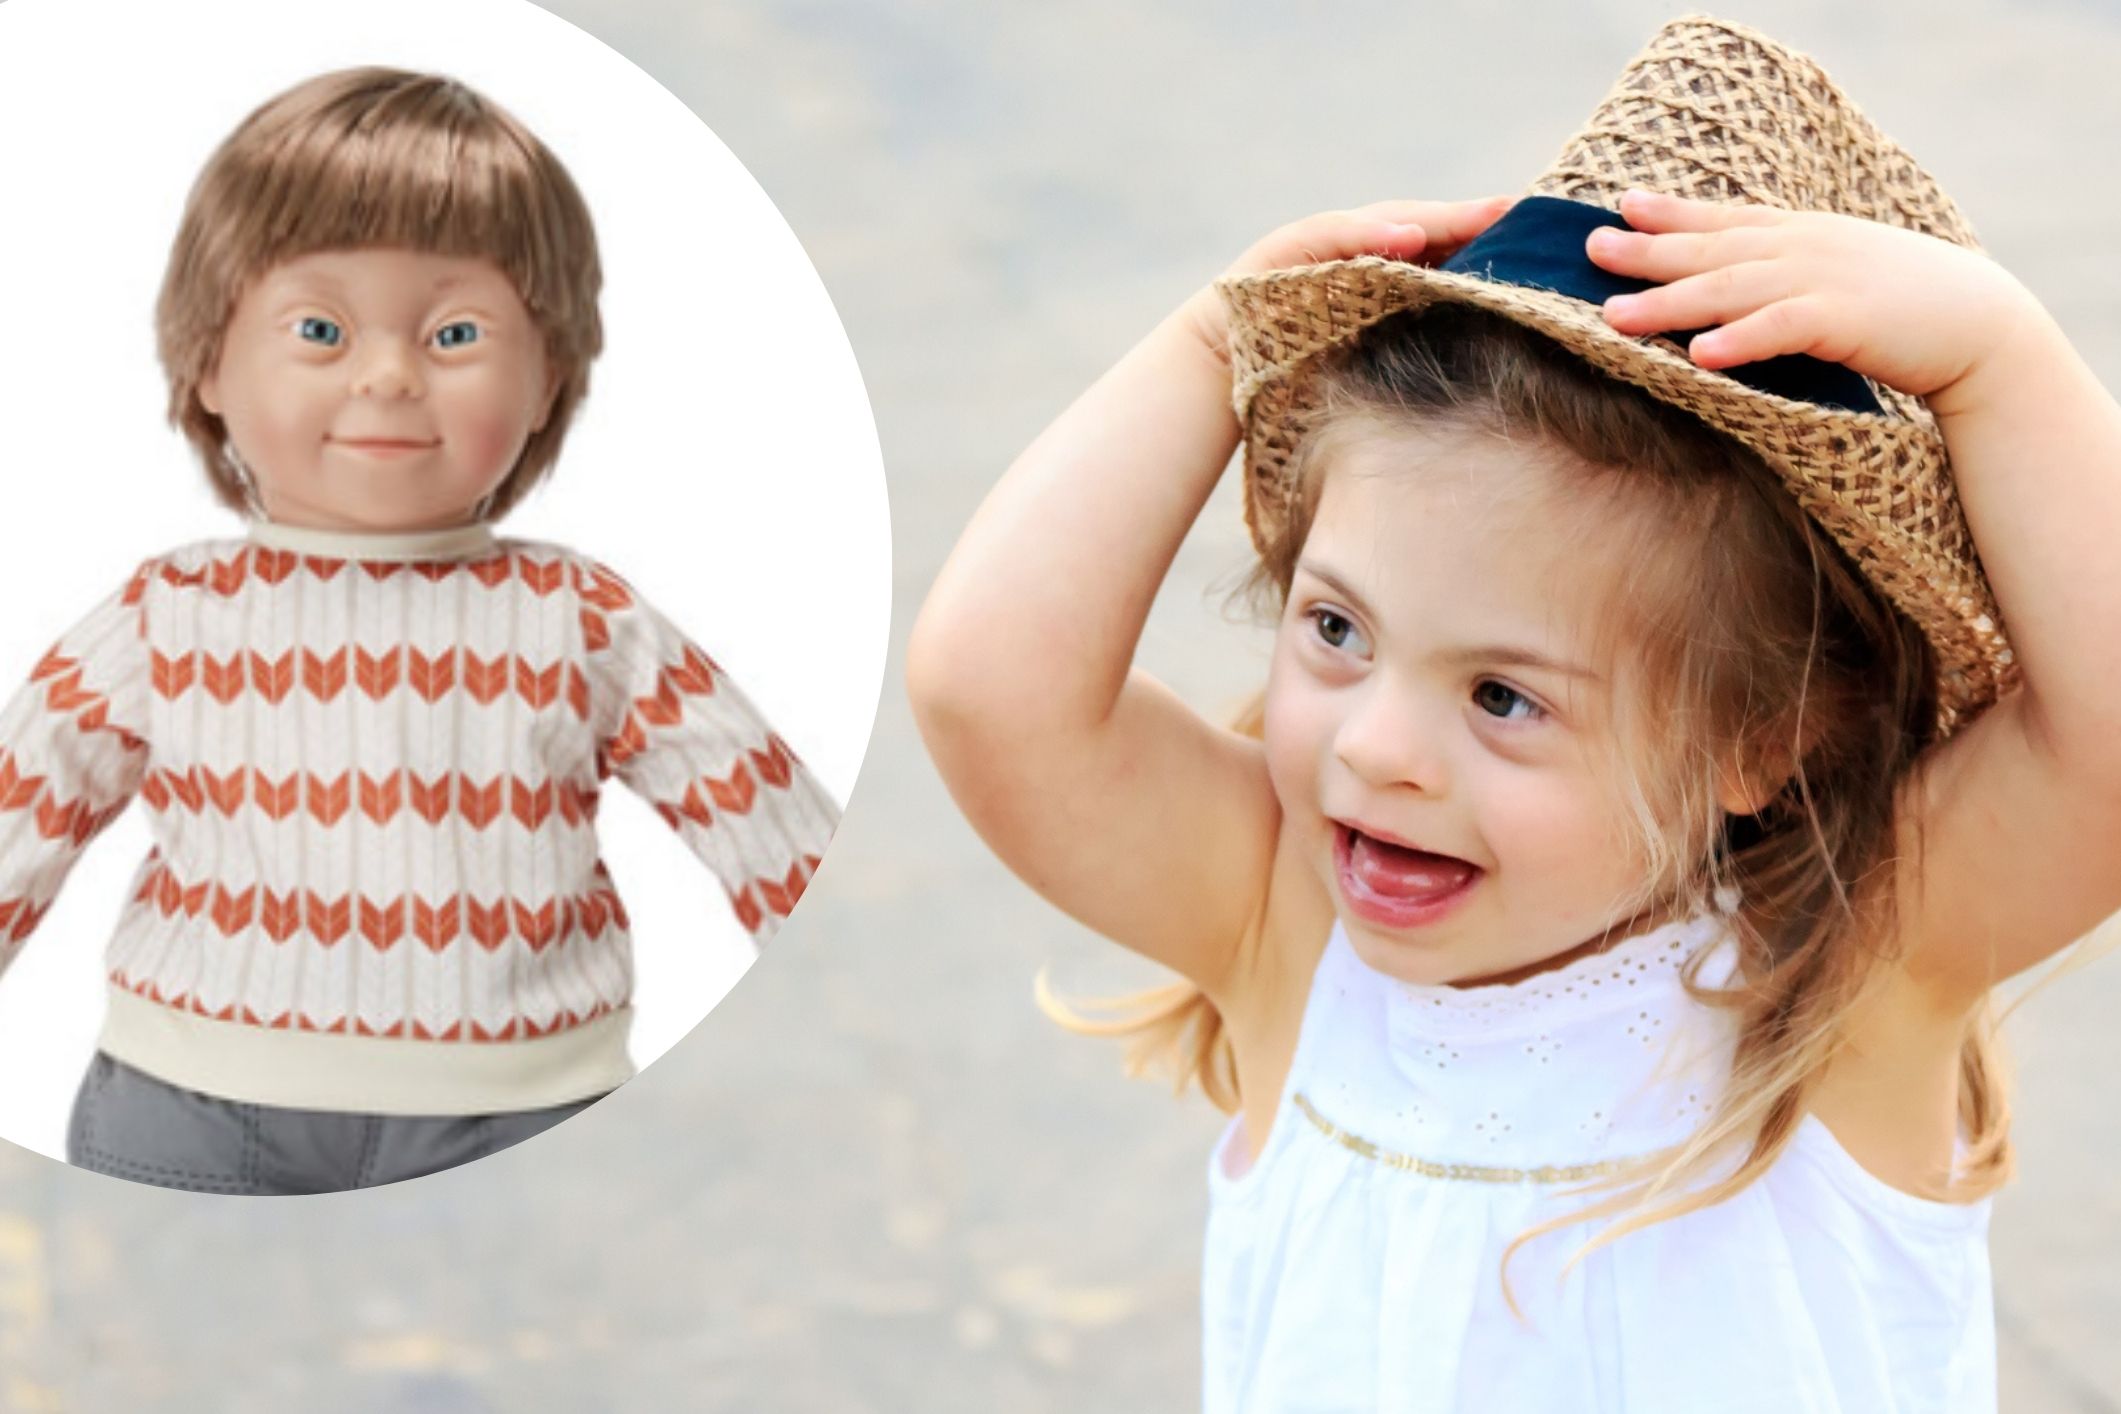 Kmart diversity dolls for kids